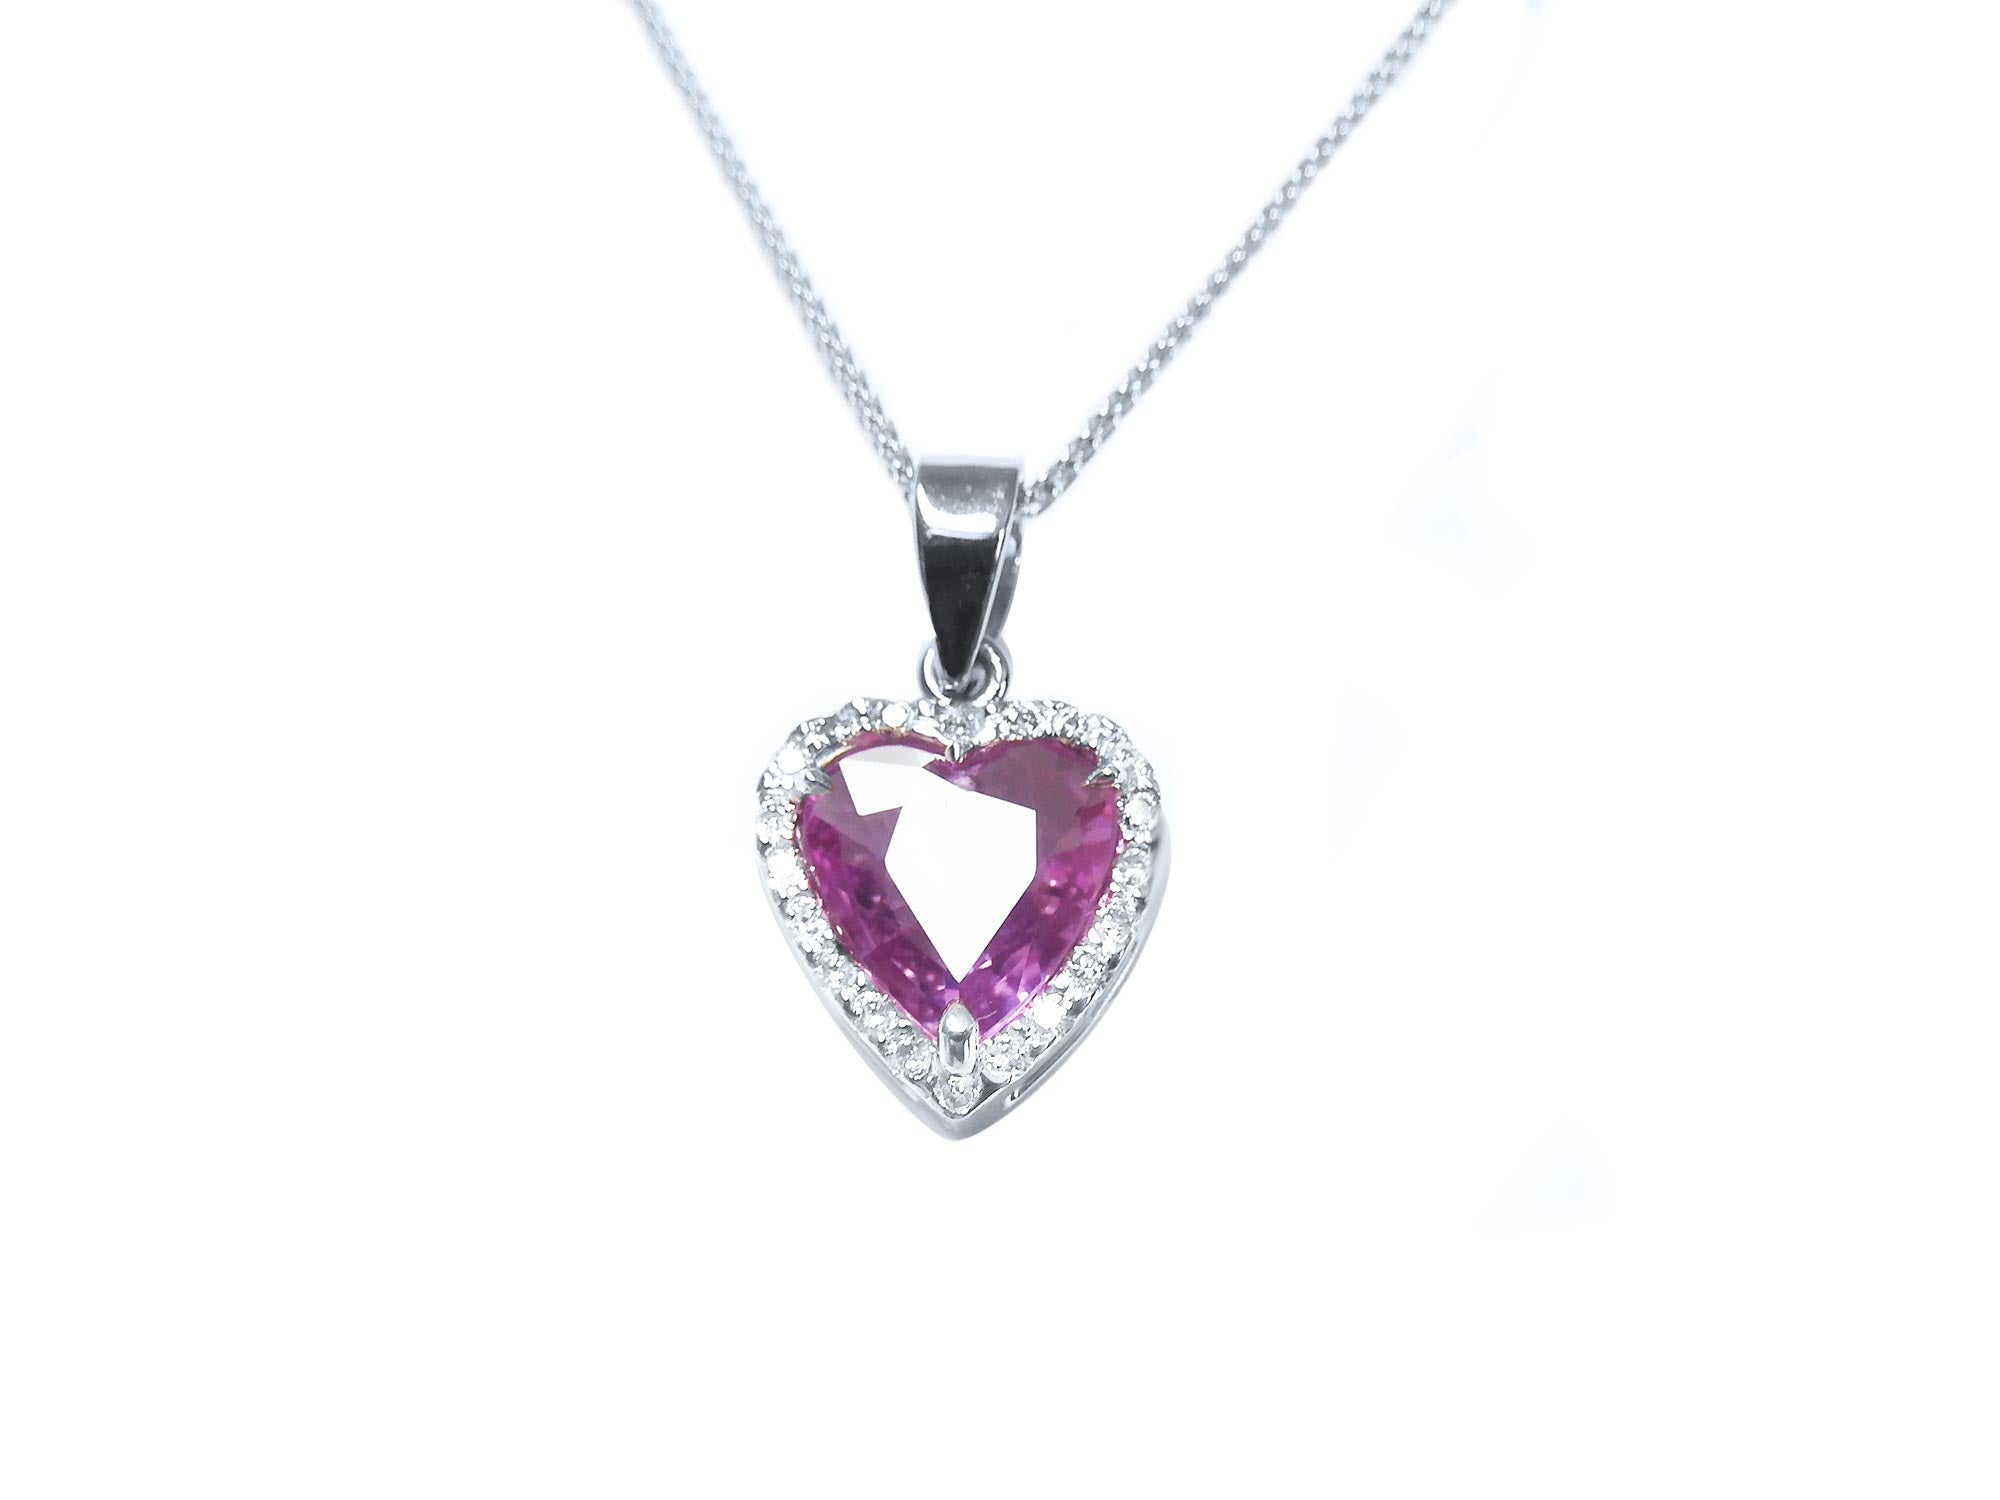 Genuine pink sapphire necklace